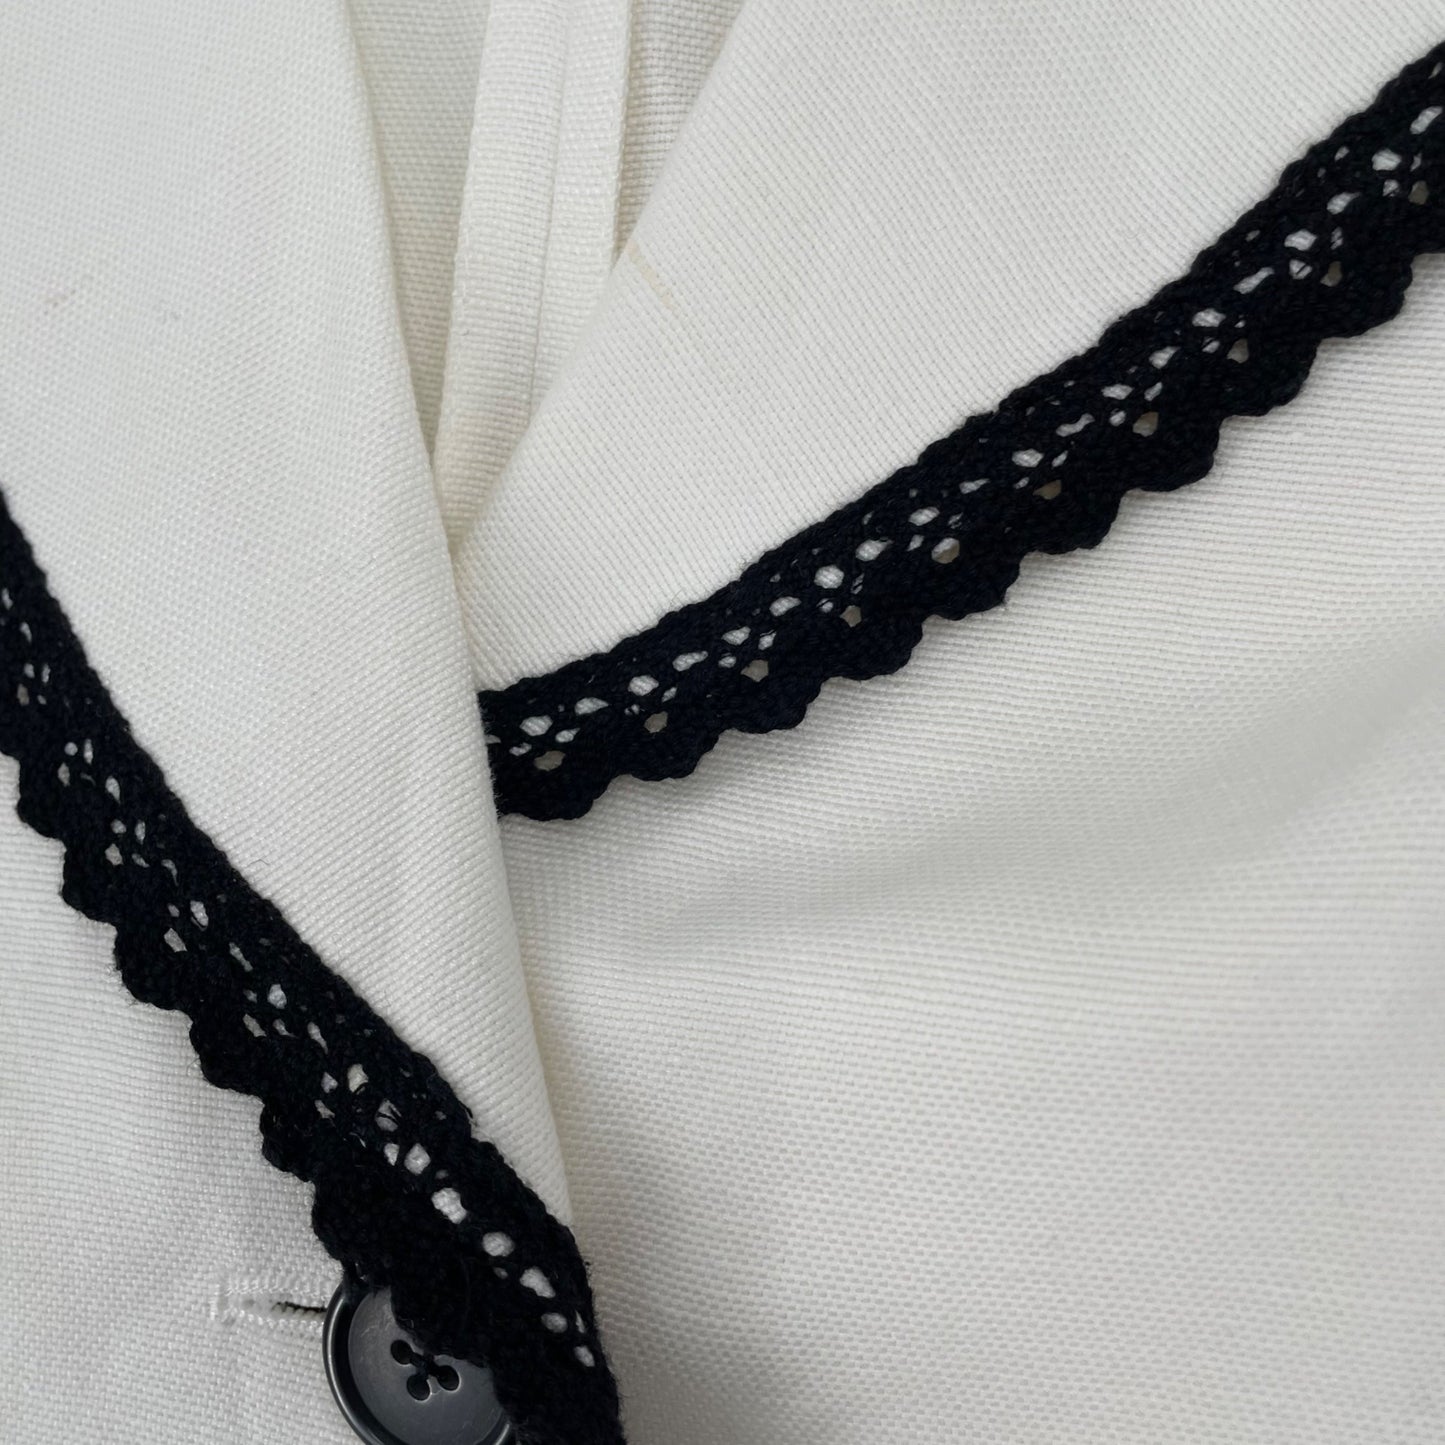 Linea by Louis Dell'Olio White Black Trim Linen Blazer Jacket Women's Size XL